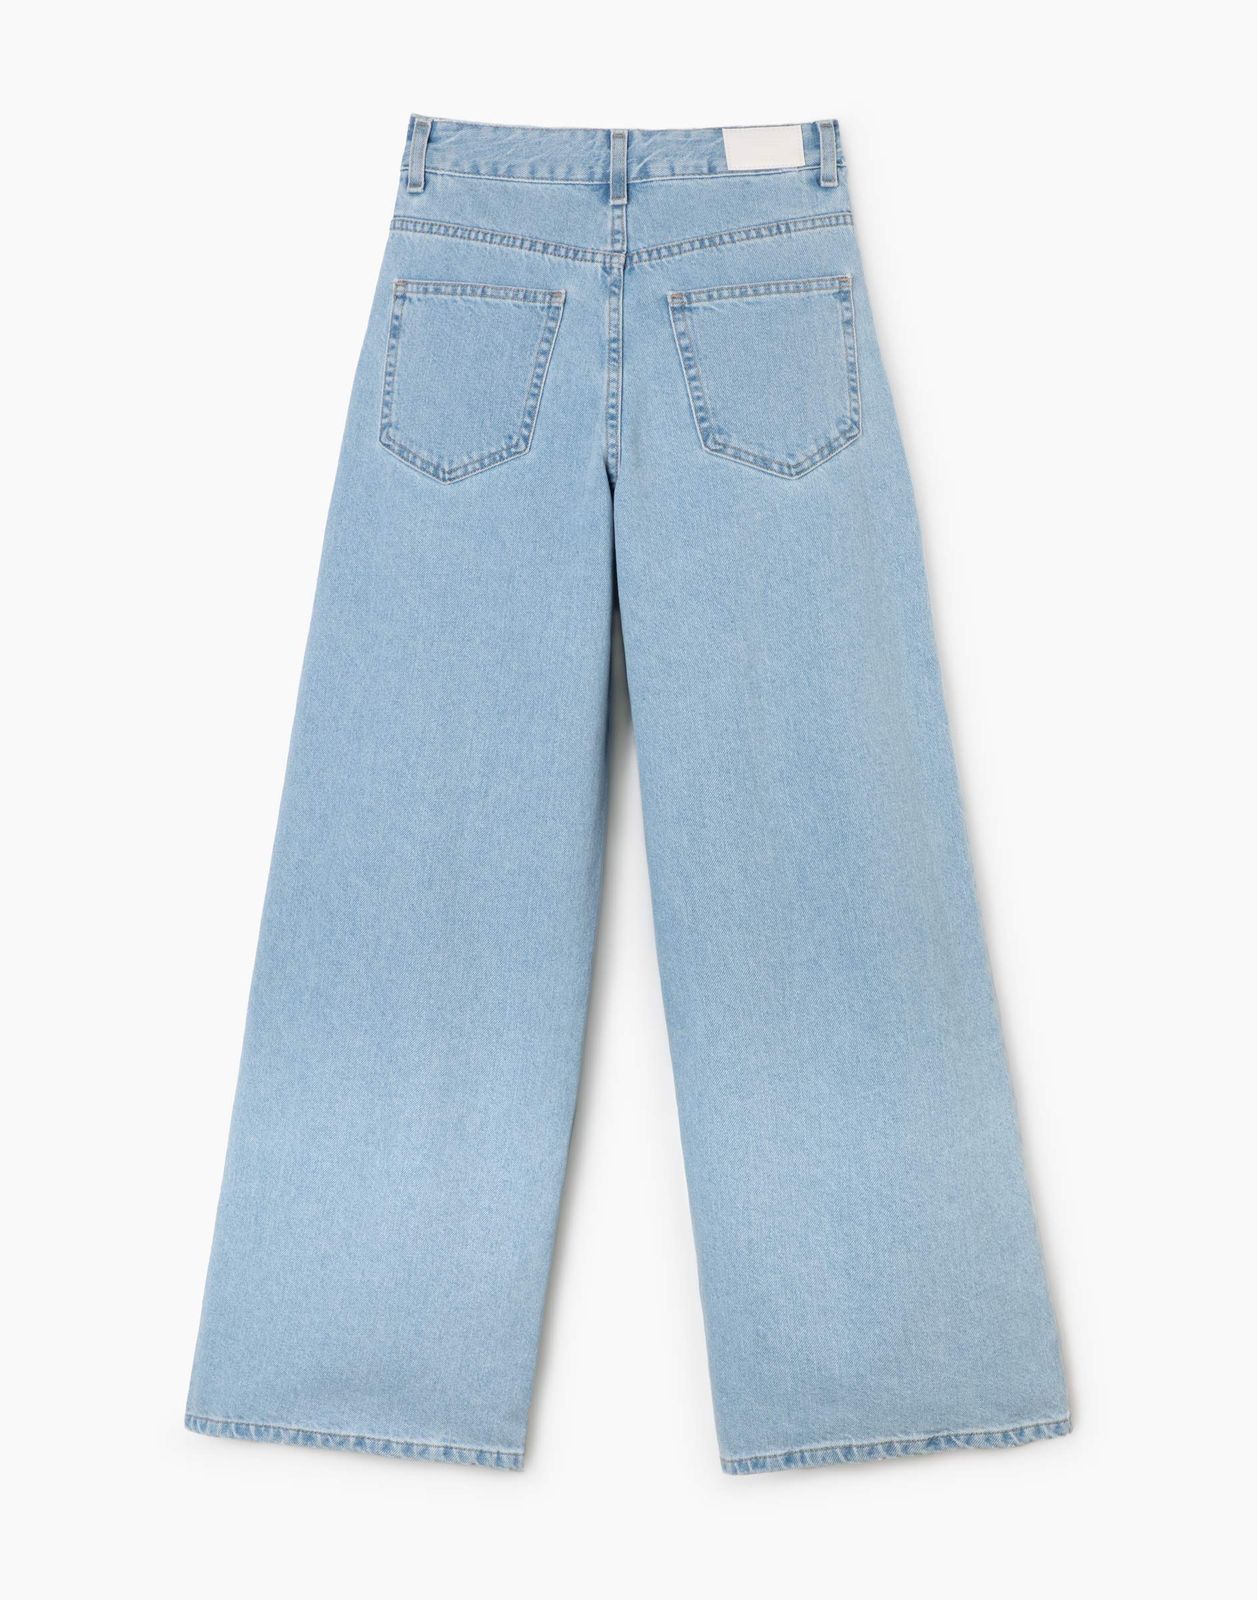 Джинсы Gloria Jeans GJN031761 синий/лайт/ 14+/164 (42) джинсы для девочек gloria jeans gjn029021 медиум лайт 9 10л 140